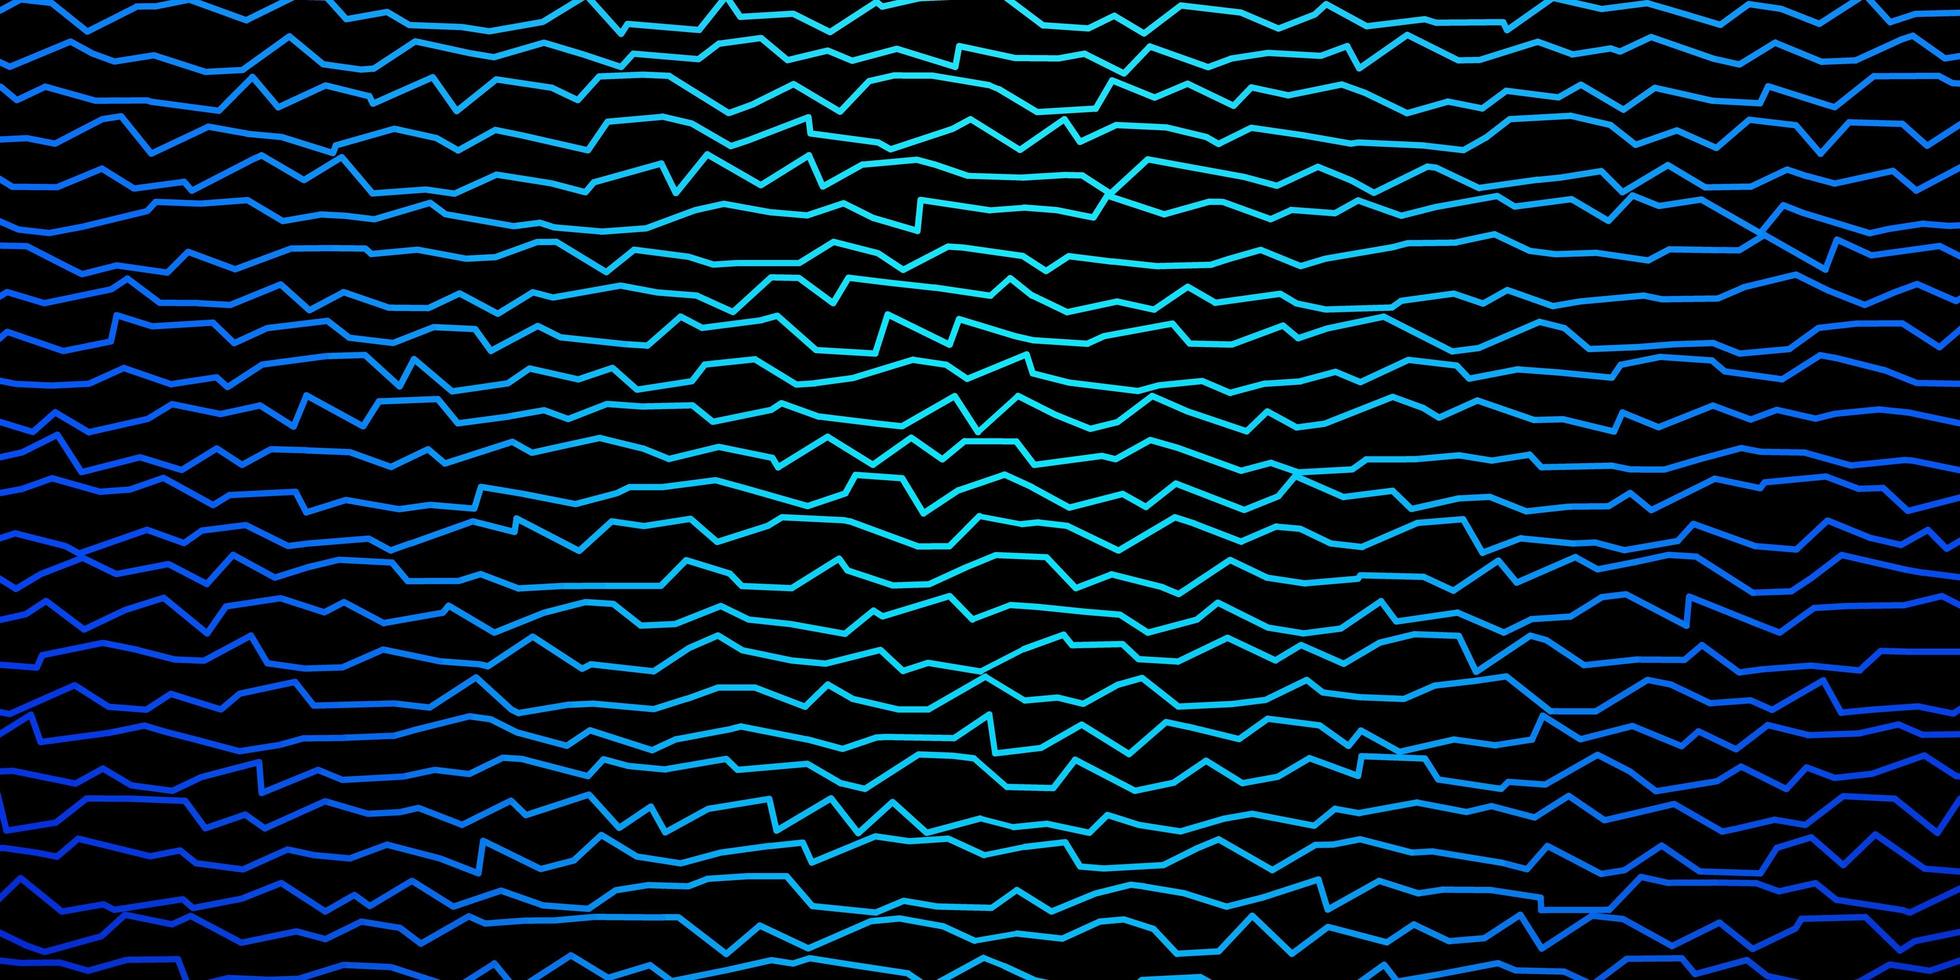 layout de vetor de azul escuro com curvas.